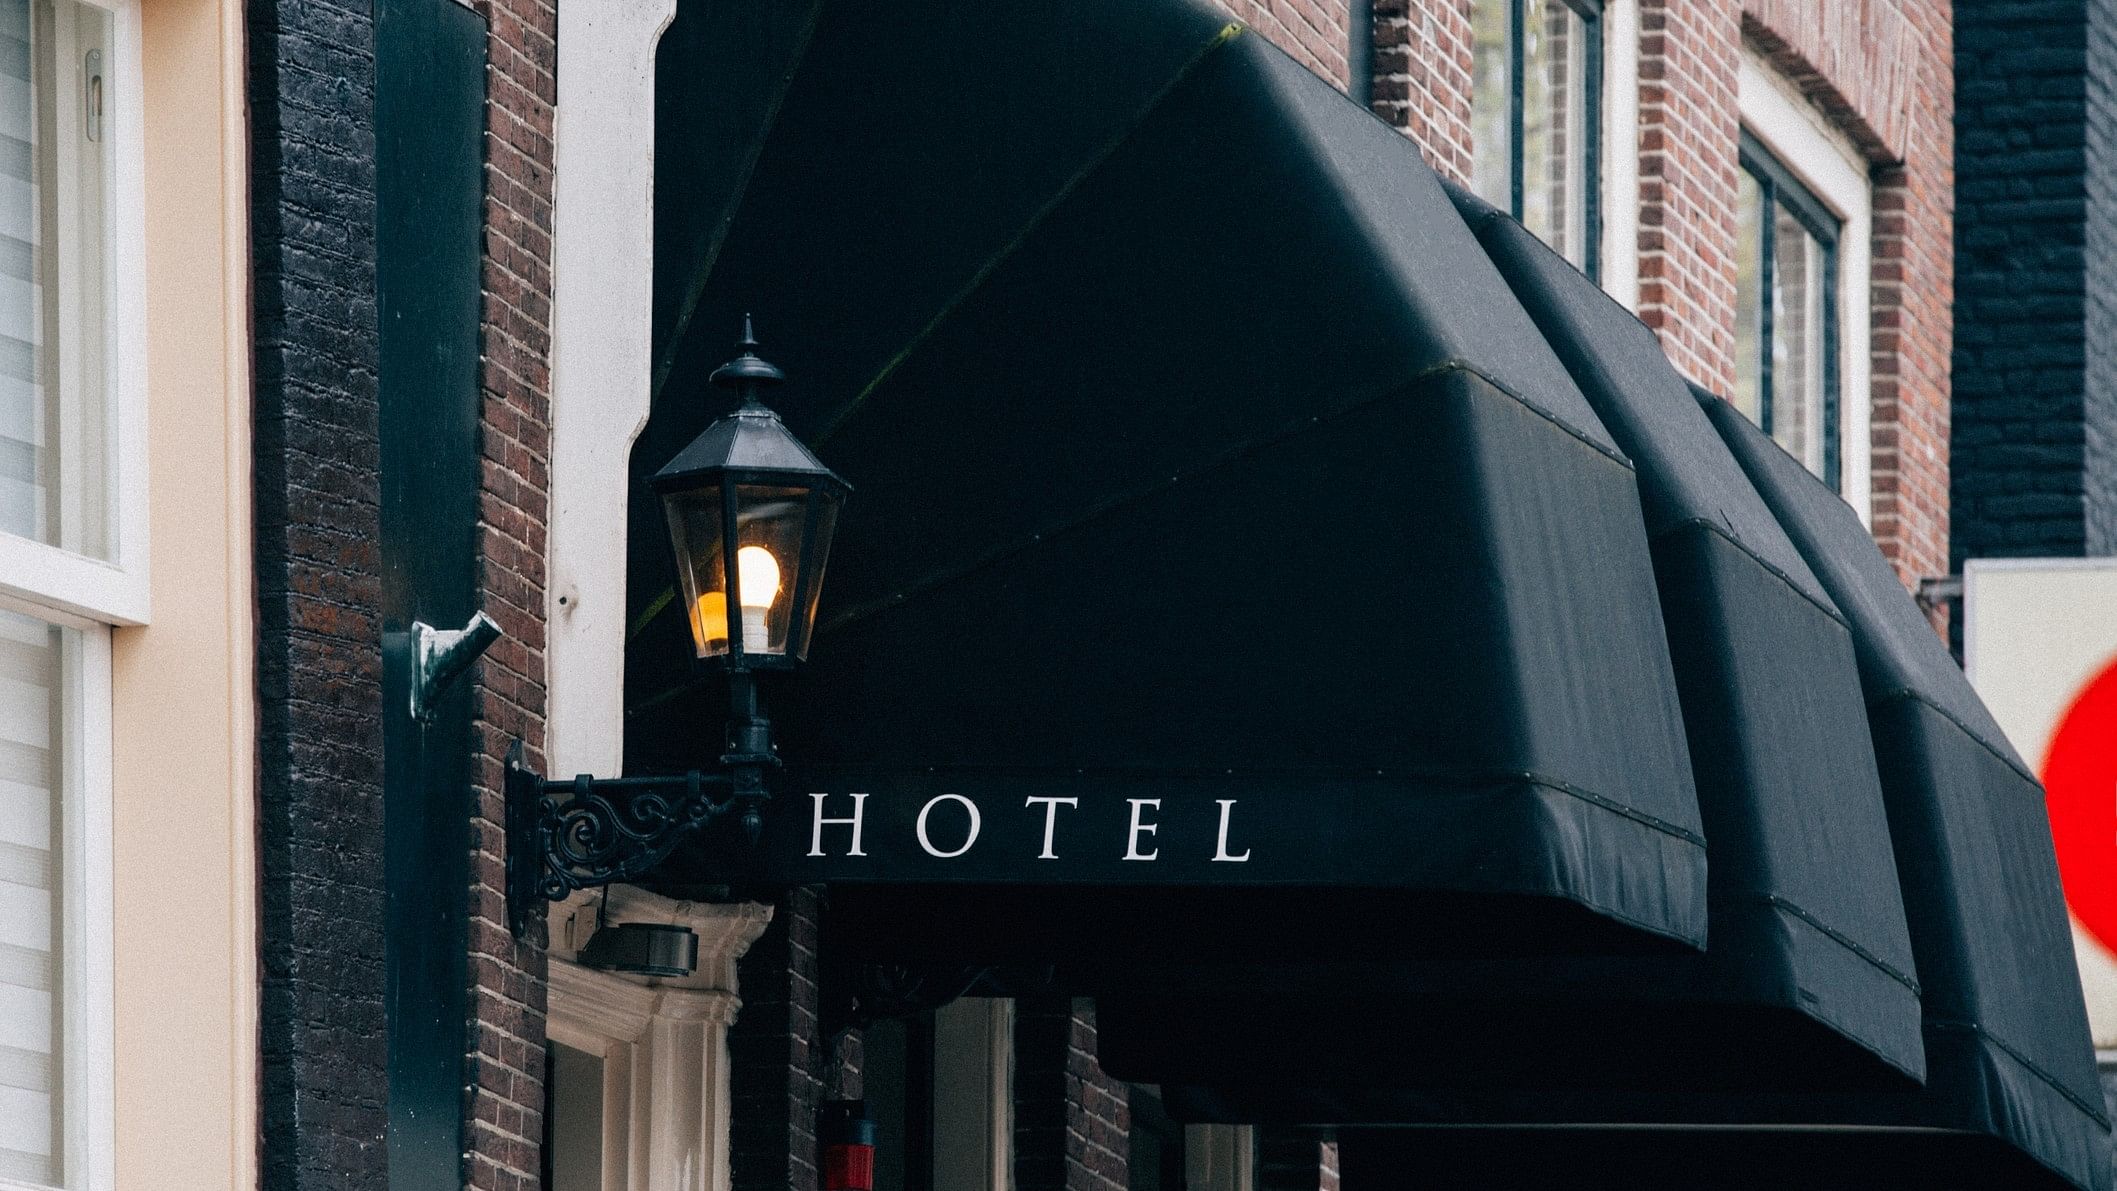 <div class="paragraphs"><p>Representative image of a hotel in Amsterdam</p></div>